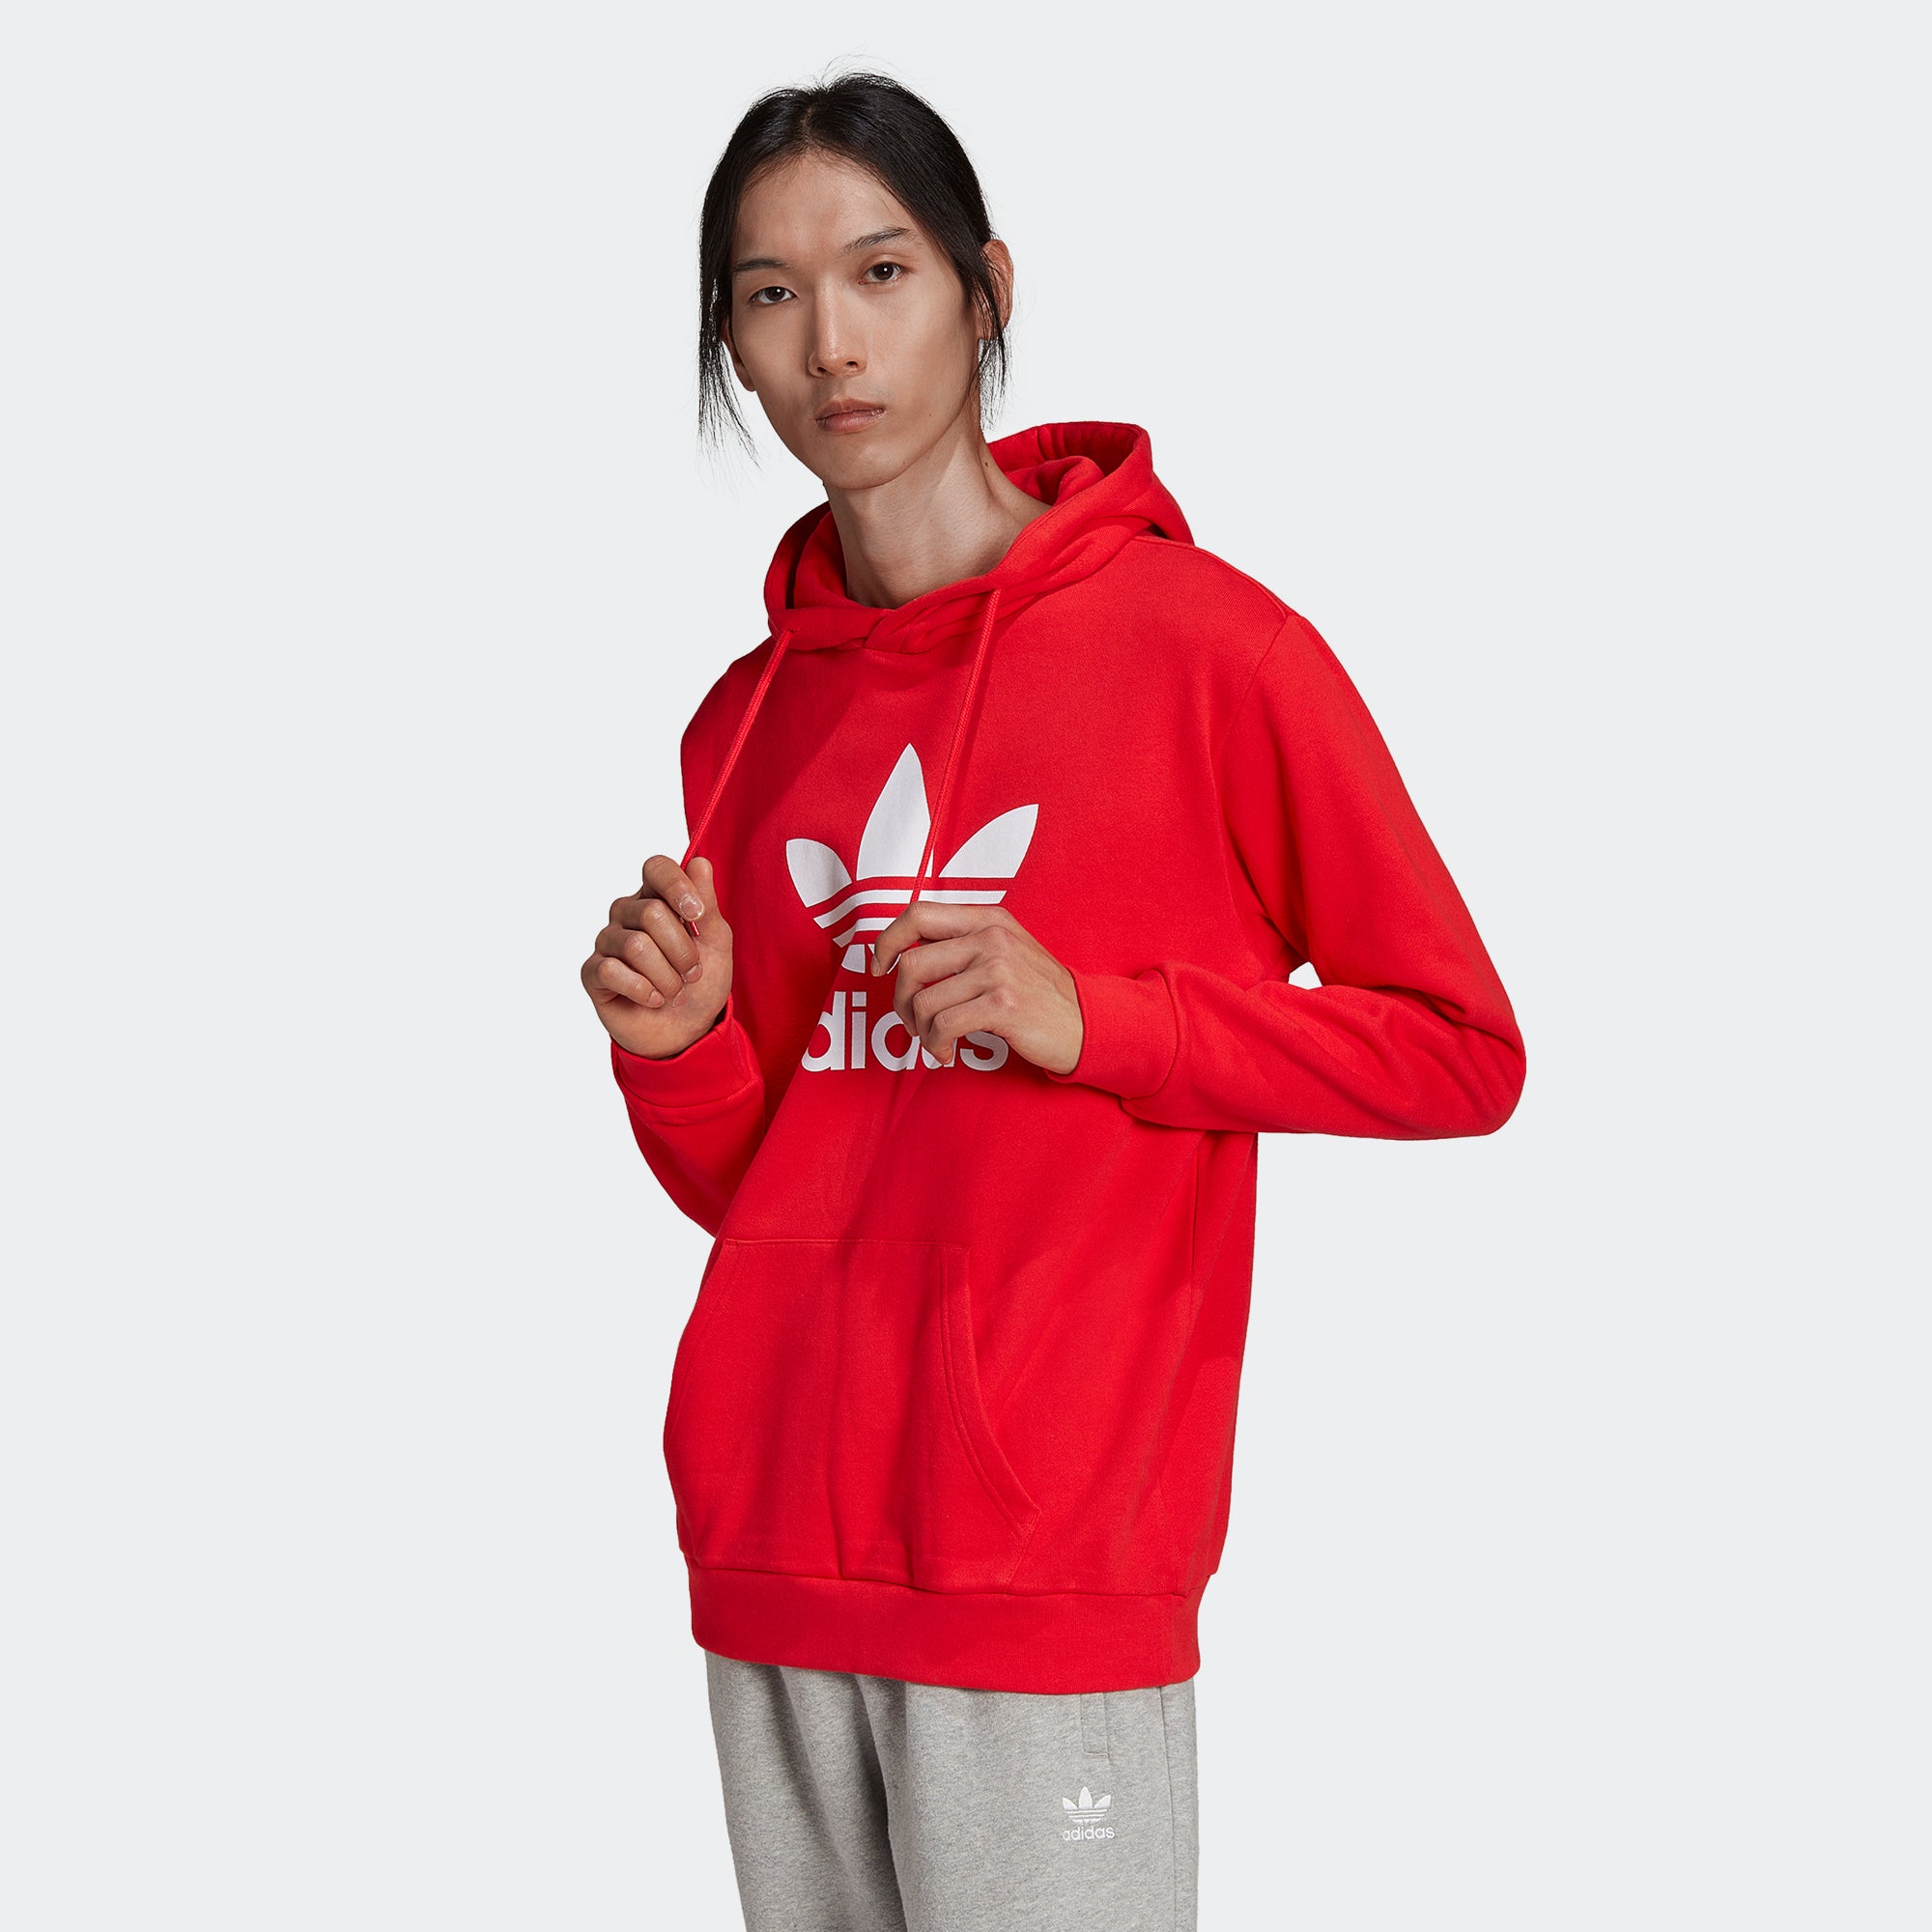 Adidas Original Trefoil Zip Up Jacket Navy Blue Red Stripe Women's Size  Small